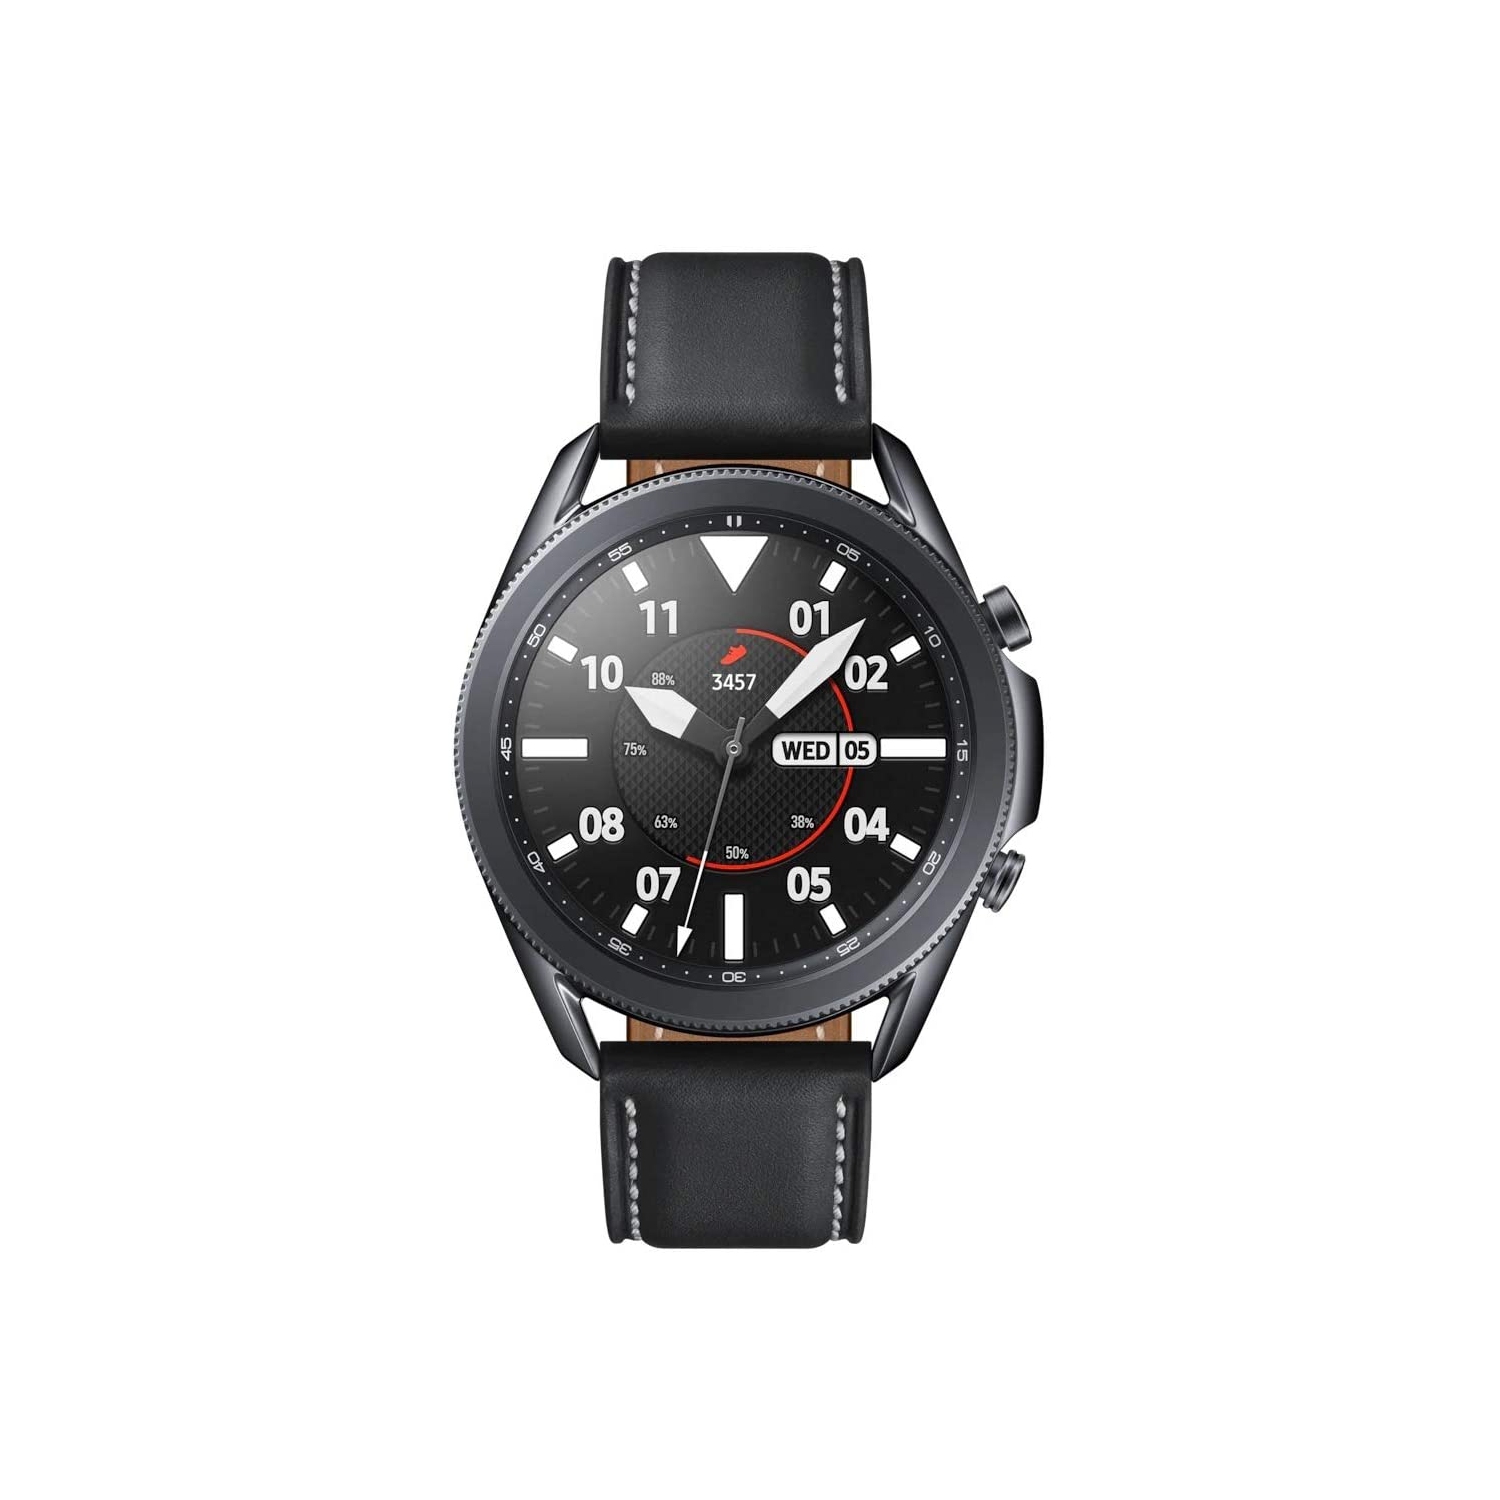 Samsung Galaxy Watch 3 (45mm, GPS, Bluetooth) Smartwatch with Advanced Health Monitoring - 8GB Internal Memory - Mystic Black + Black Leather Band (NEW)